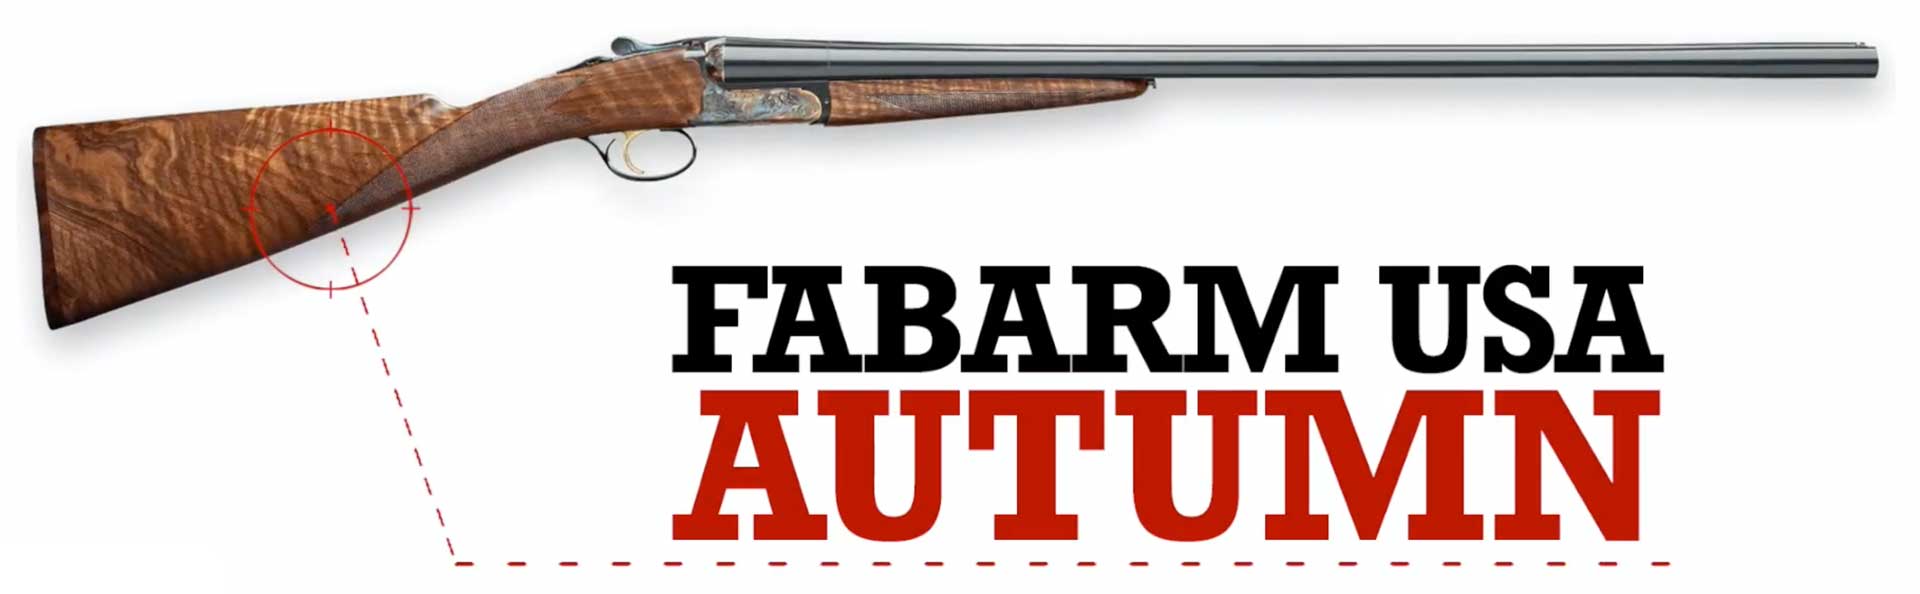 right side shotgun walnut wood metal gun text on image noting "Fabarm USA Autumn"